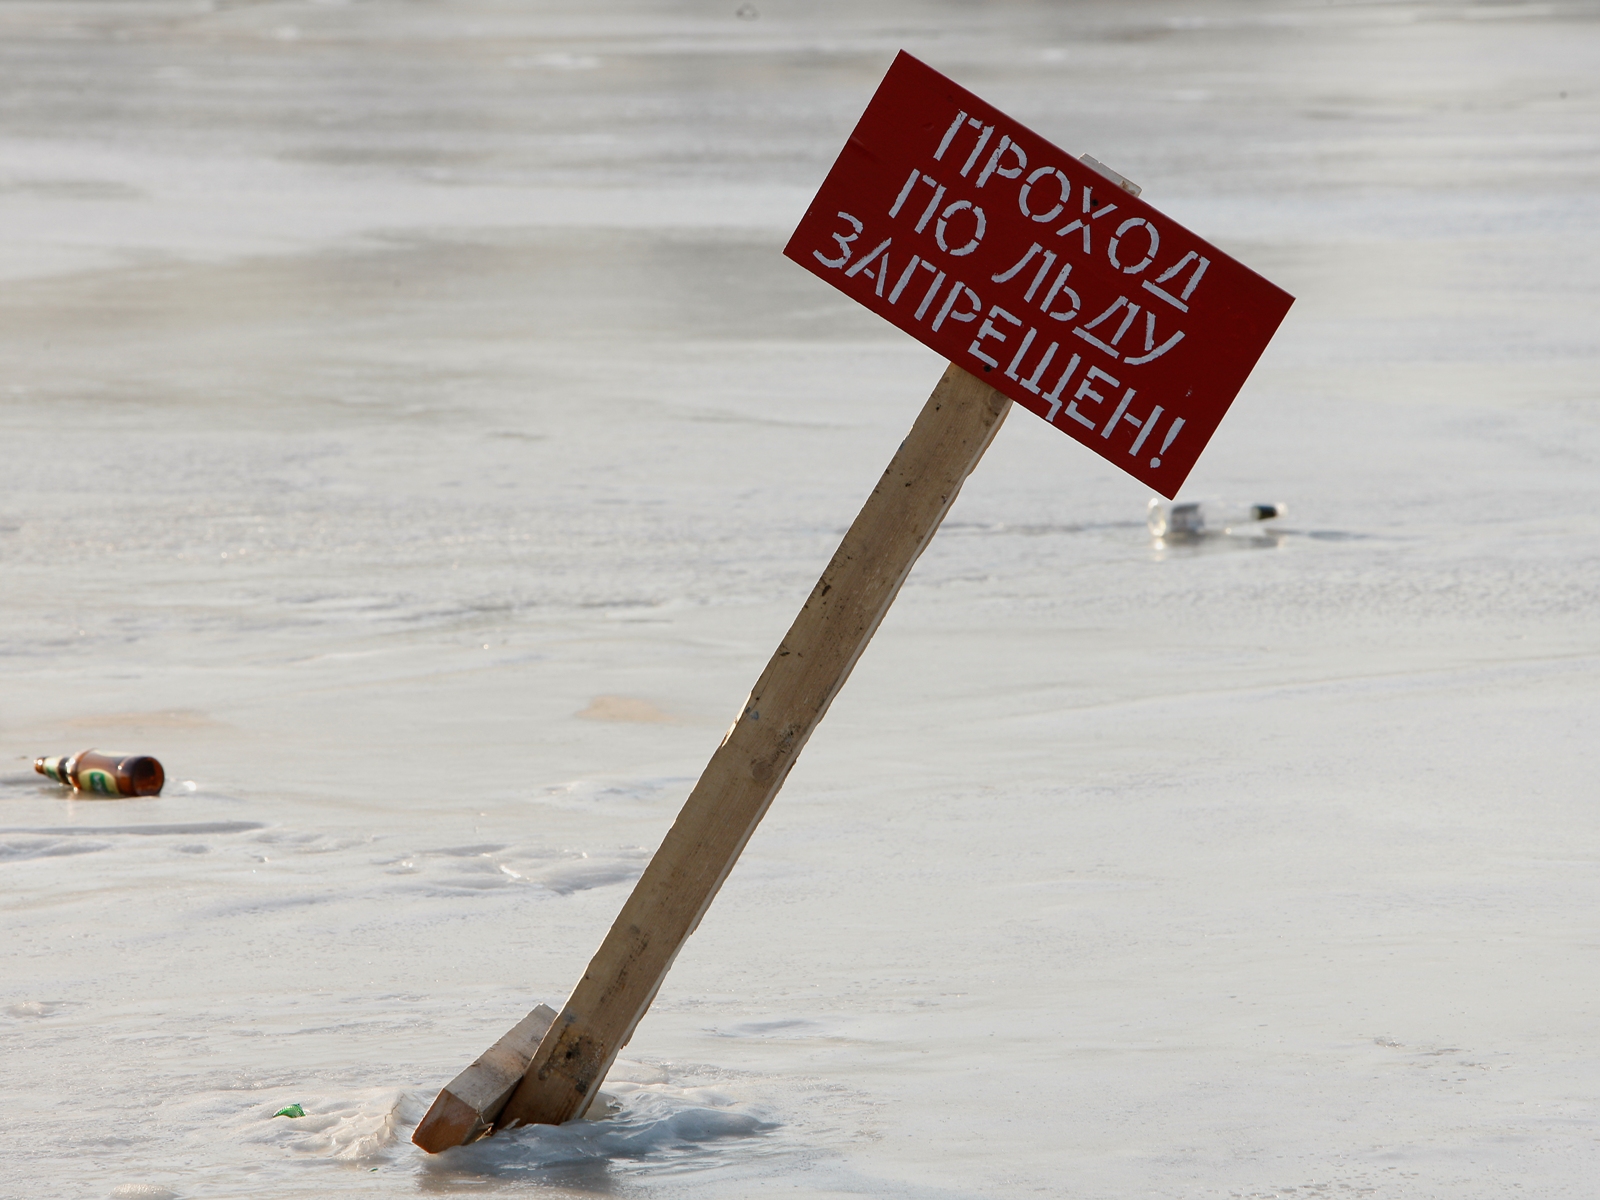 Запрет выхода на лед рыбинское водохранилище. Не выходить на лед. Запрет выхода на лед. Выход на лед. Не выходи на лед.